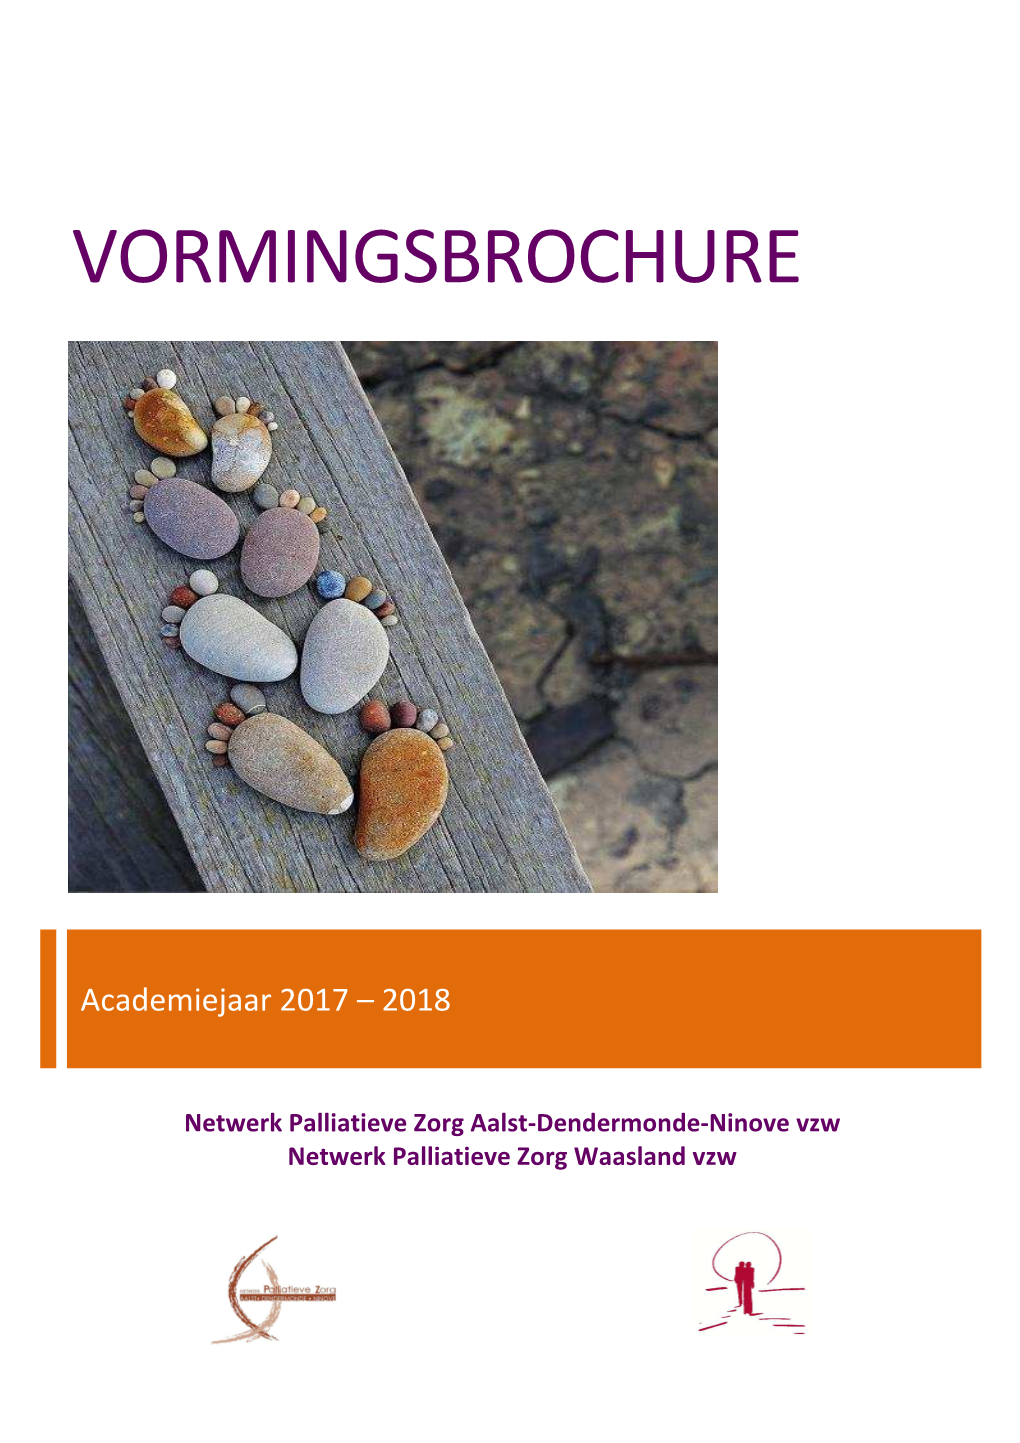 Vormingsbrochure 2017-2018